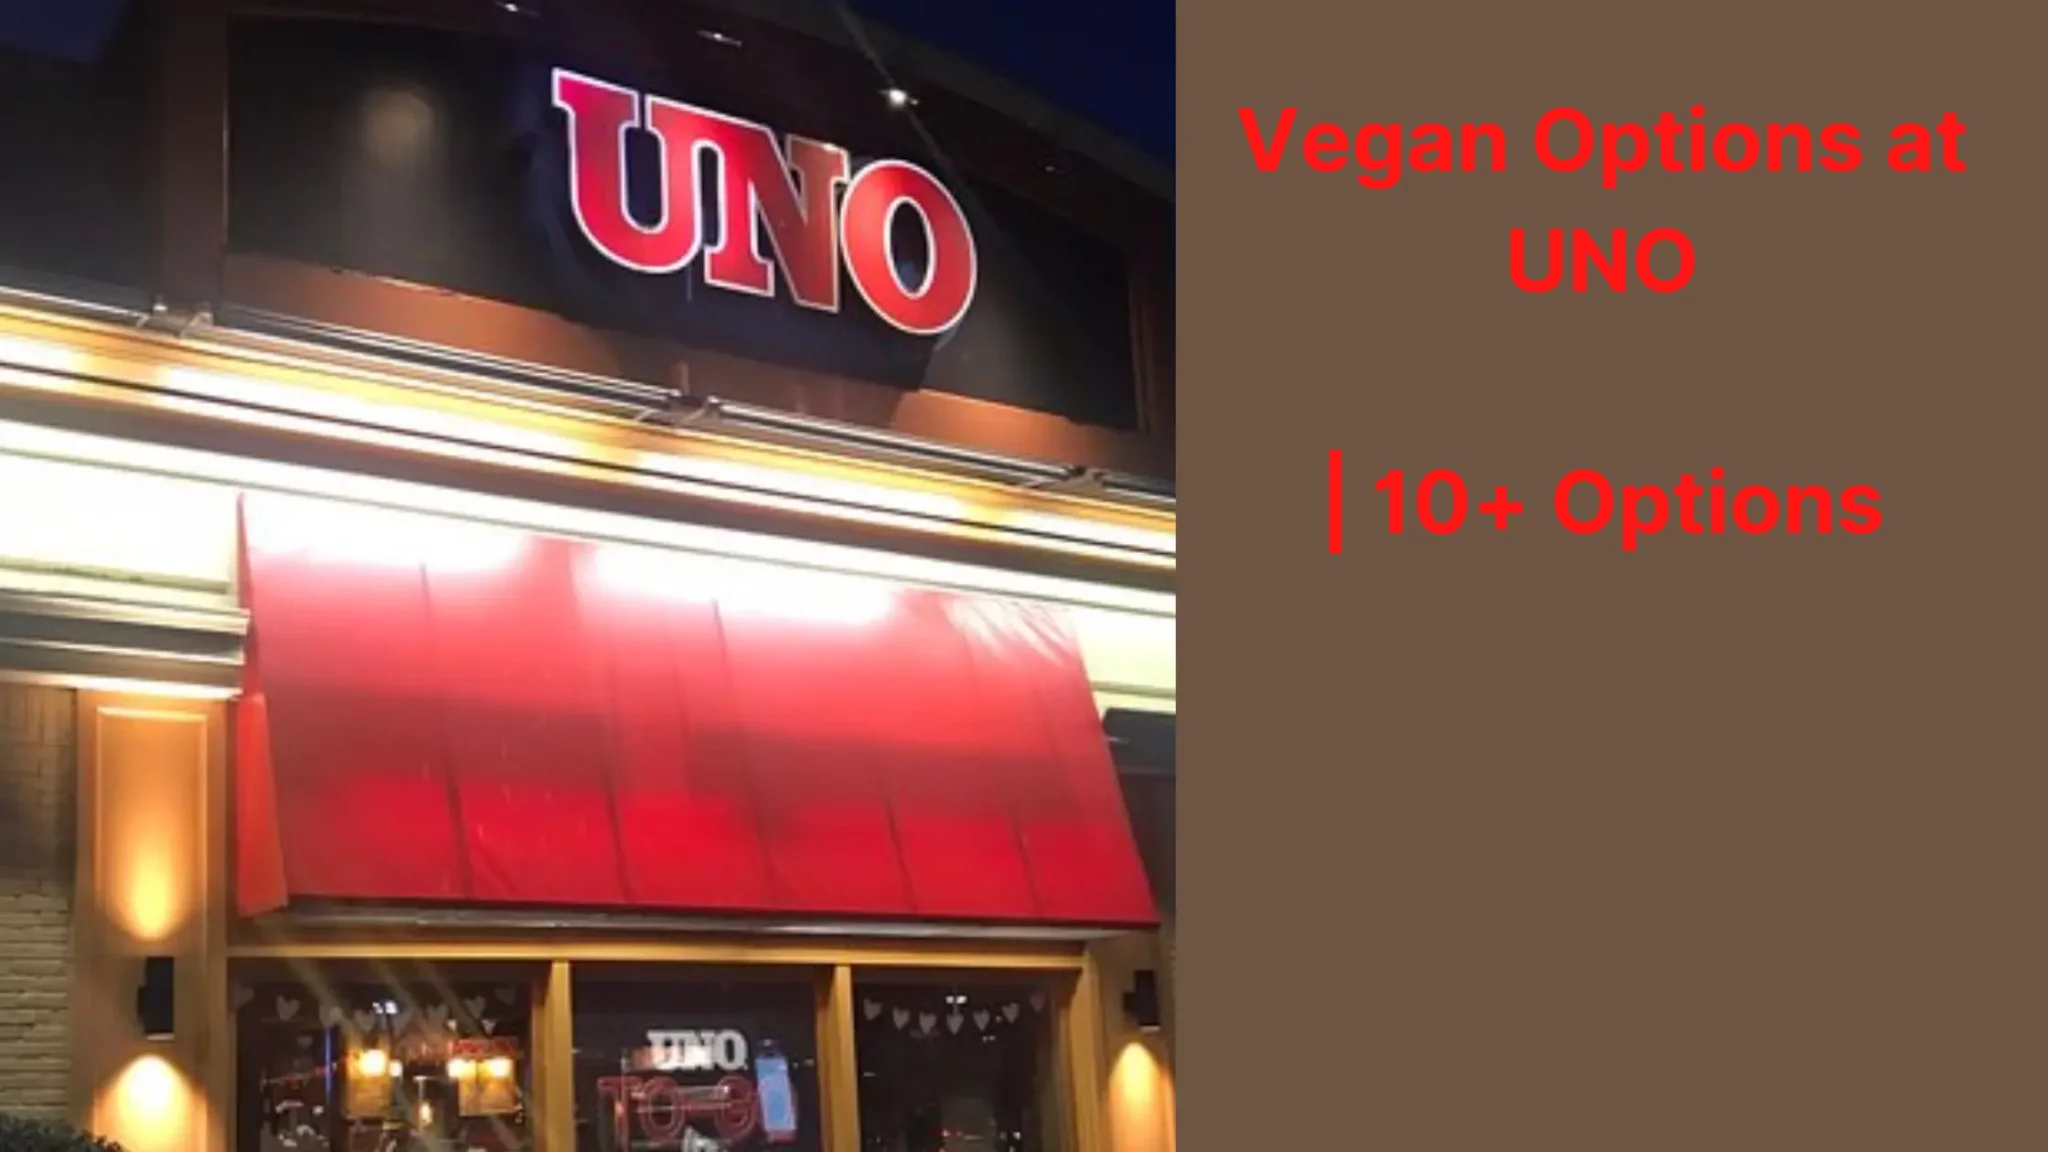 Vegan Options at UNO